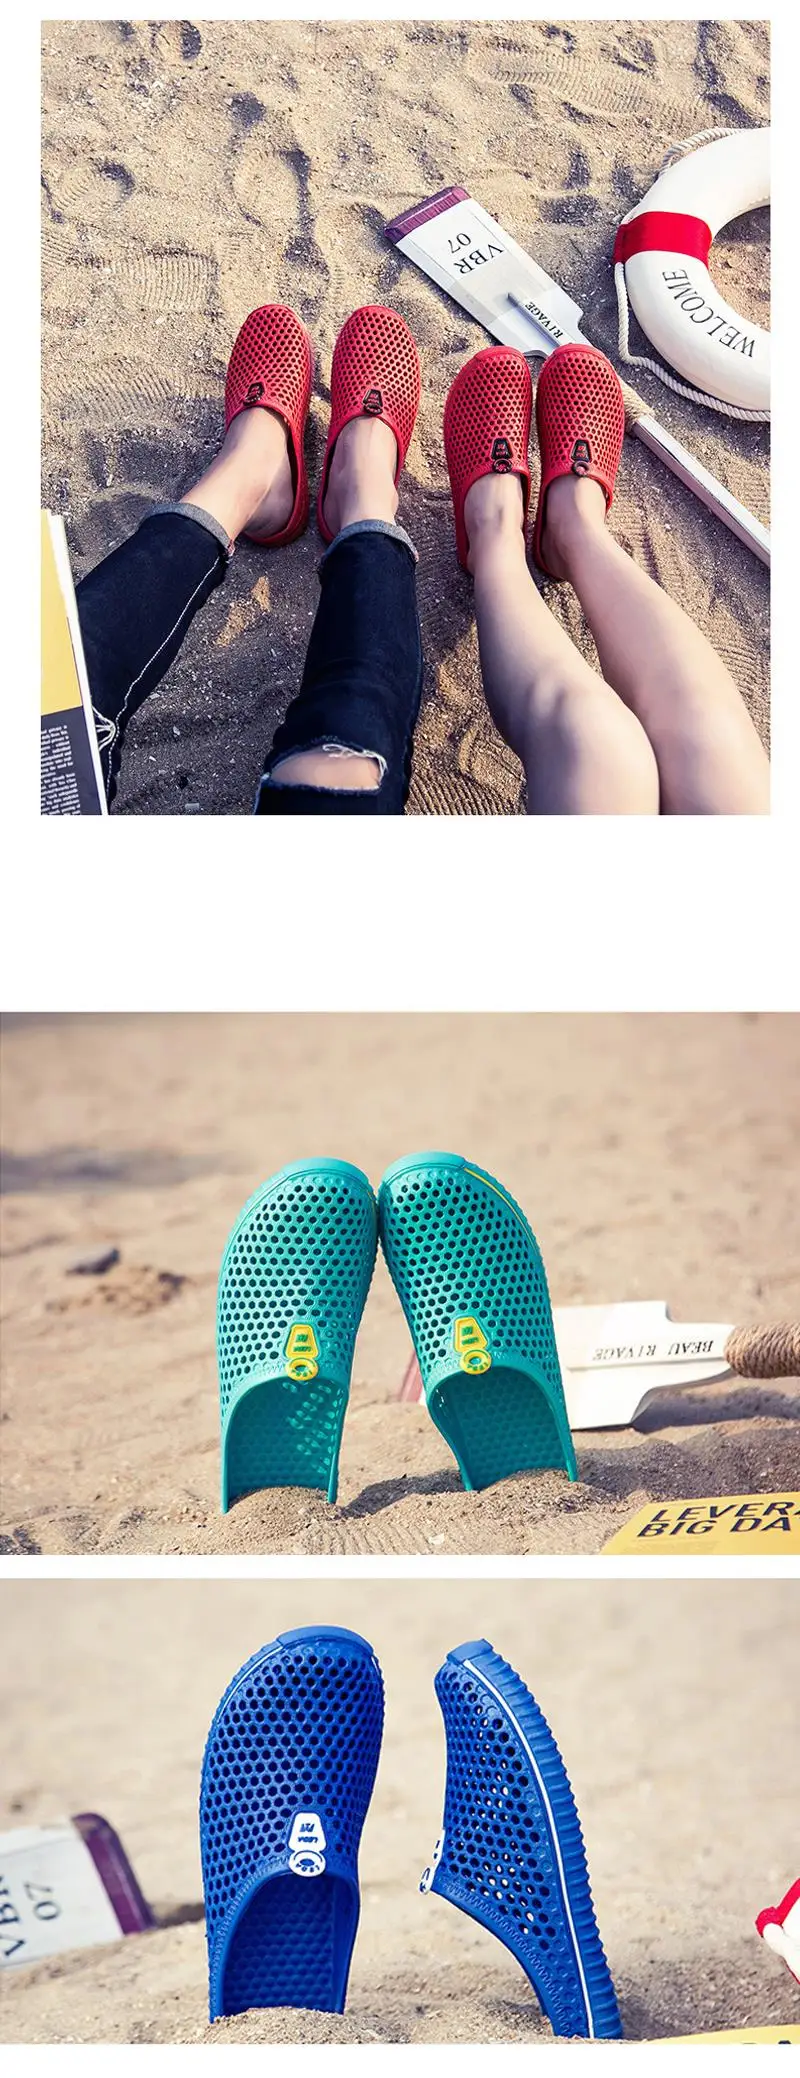 Lurehooker/мужские сандалии с отверстиями; летние тапочки с отверстиями; модные уличные дышащие Вьетнамки; пляжные мужские сандалии; шлепанцы; мужская обувь